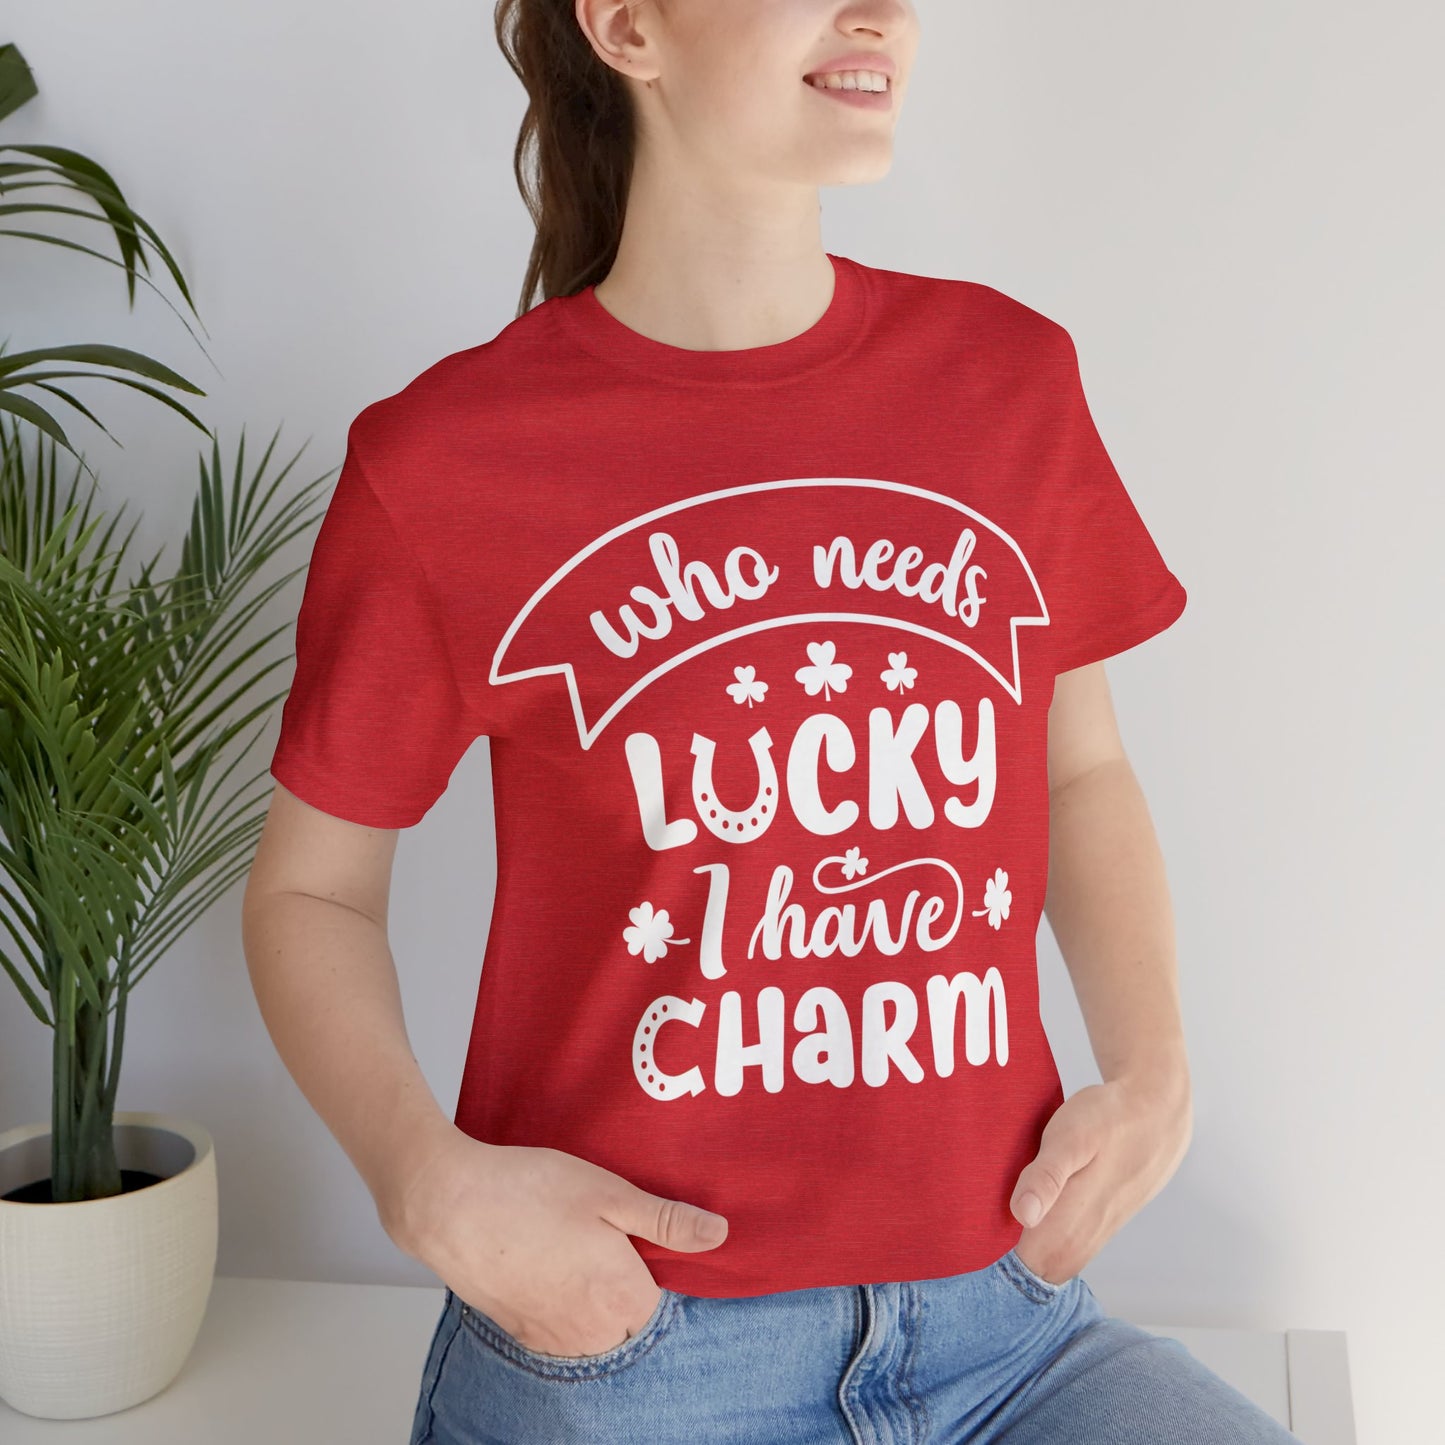 Who Needs Lucky I have Charm St Patrick's Day shirt Clover Shirt Irish Shirt